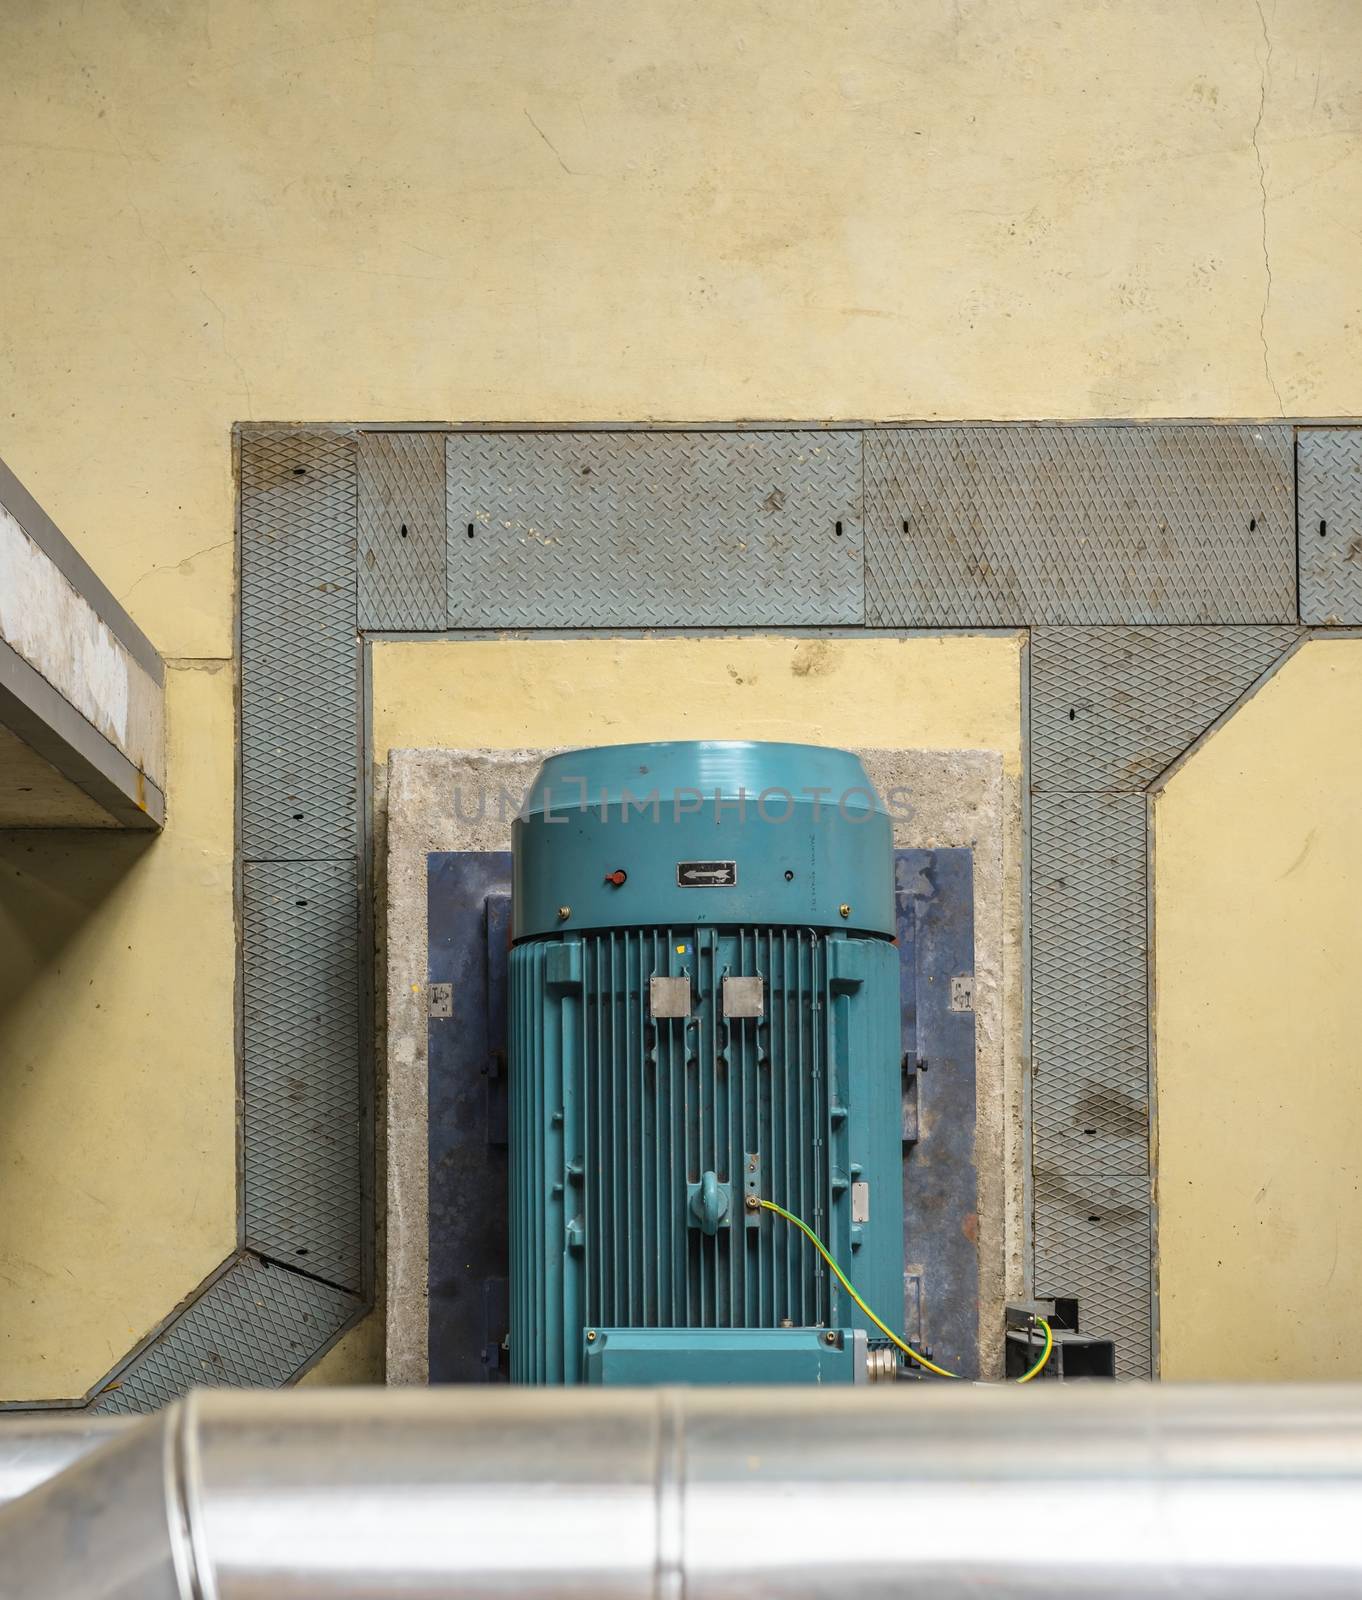 Electric Industrial generator inside power plant closeup